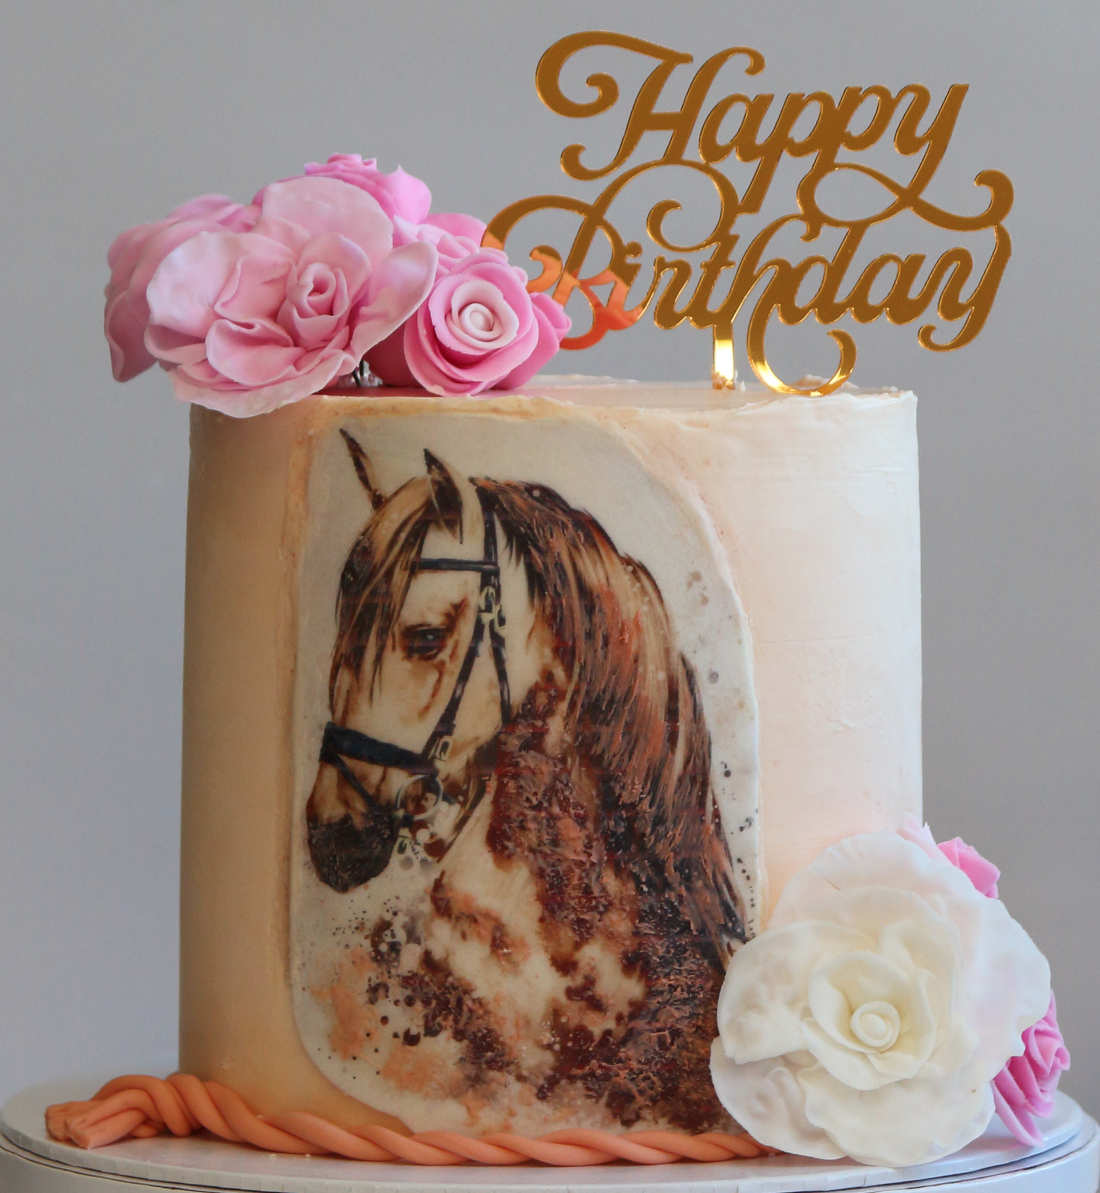 Girl's birthday cake with edible image